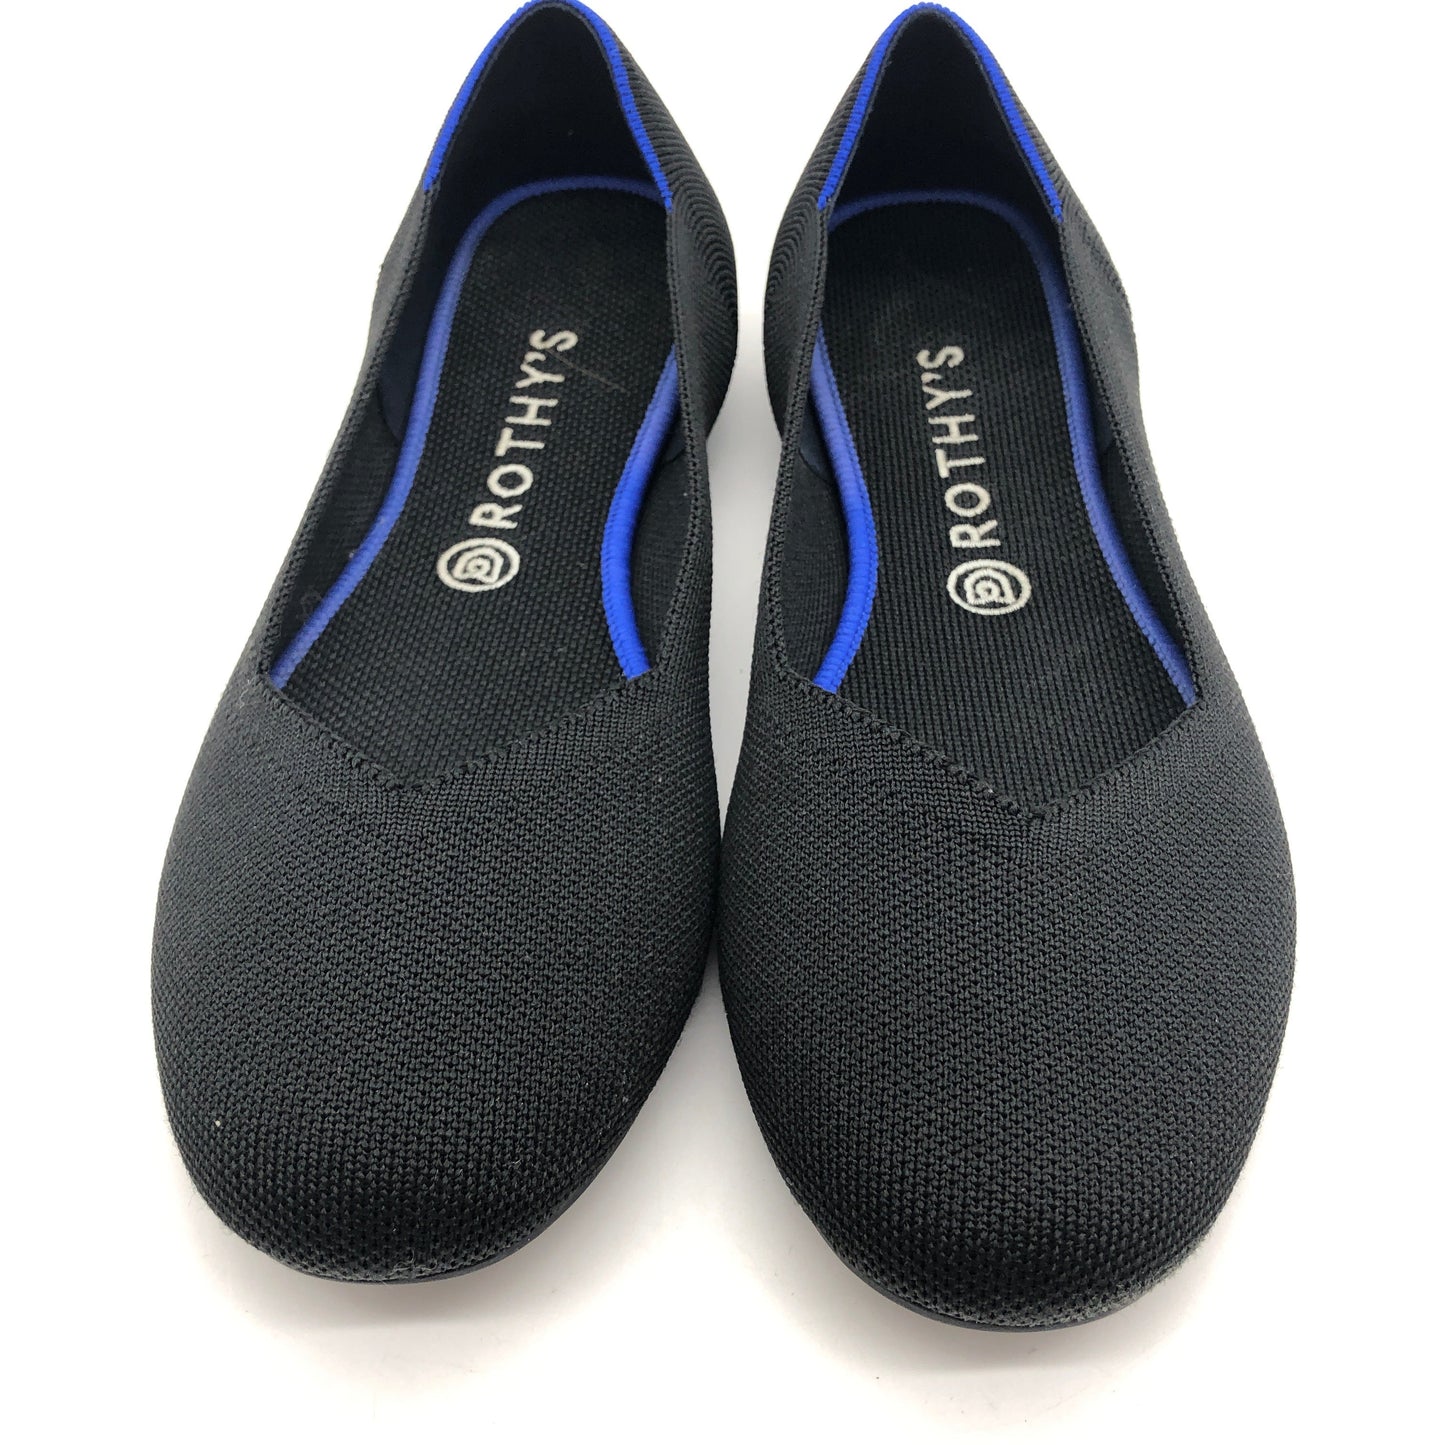 Black & Blue Shoes Designer Rothys, Size 11